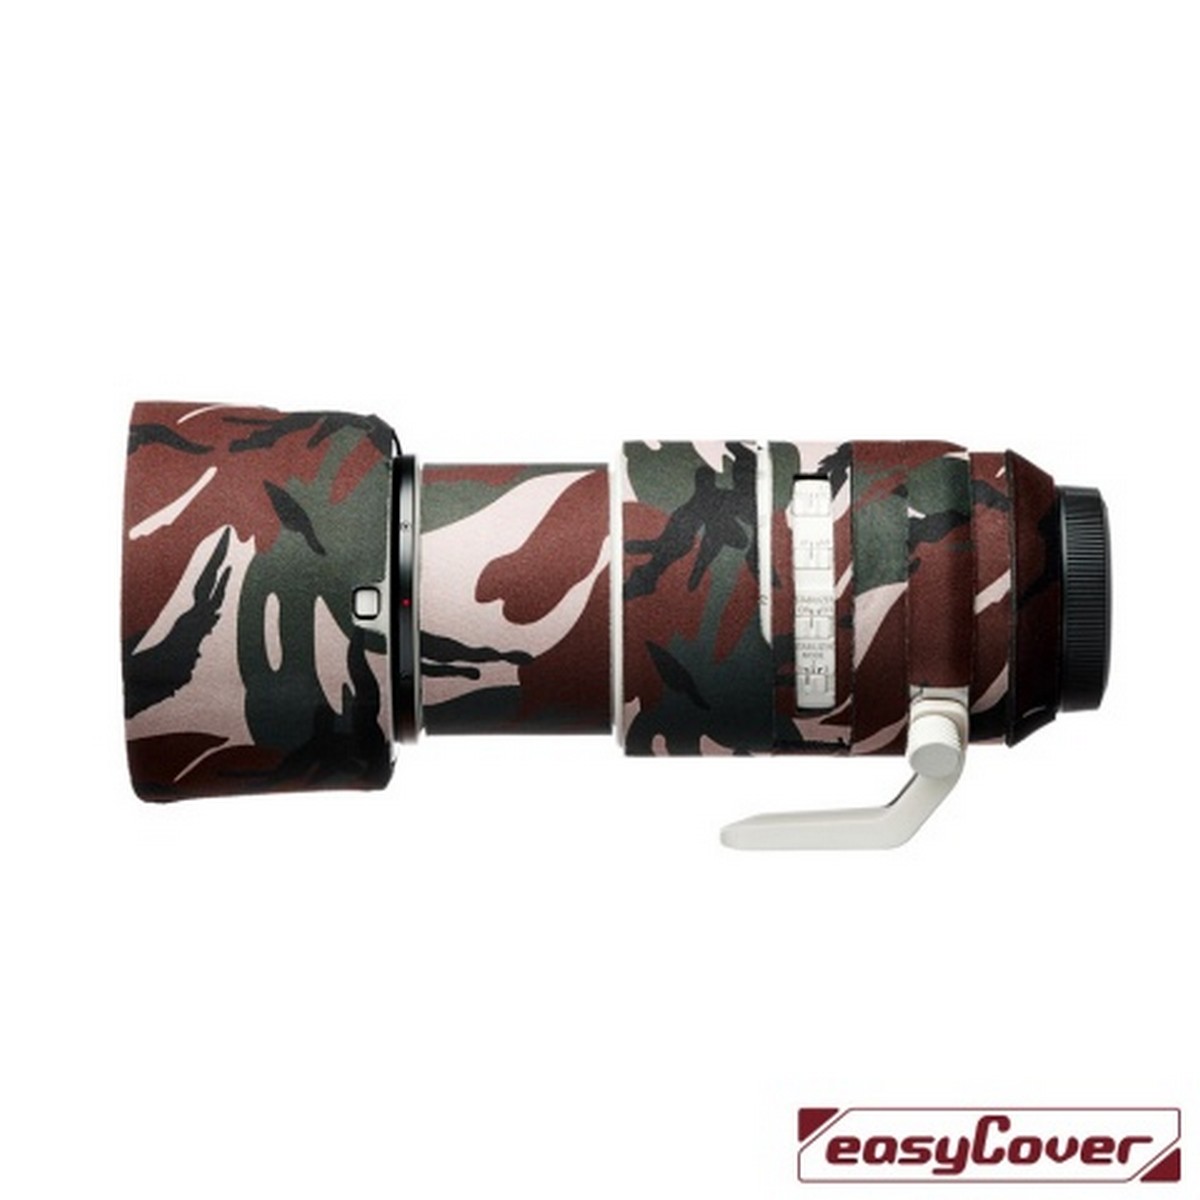 Easycover Lens Oak Objektivschutz für Canon RF 70-200 mm 1:2.8L IS USM Green Camouflage